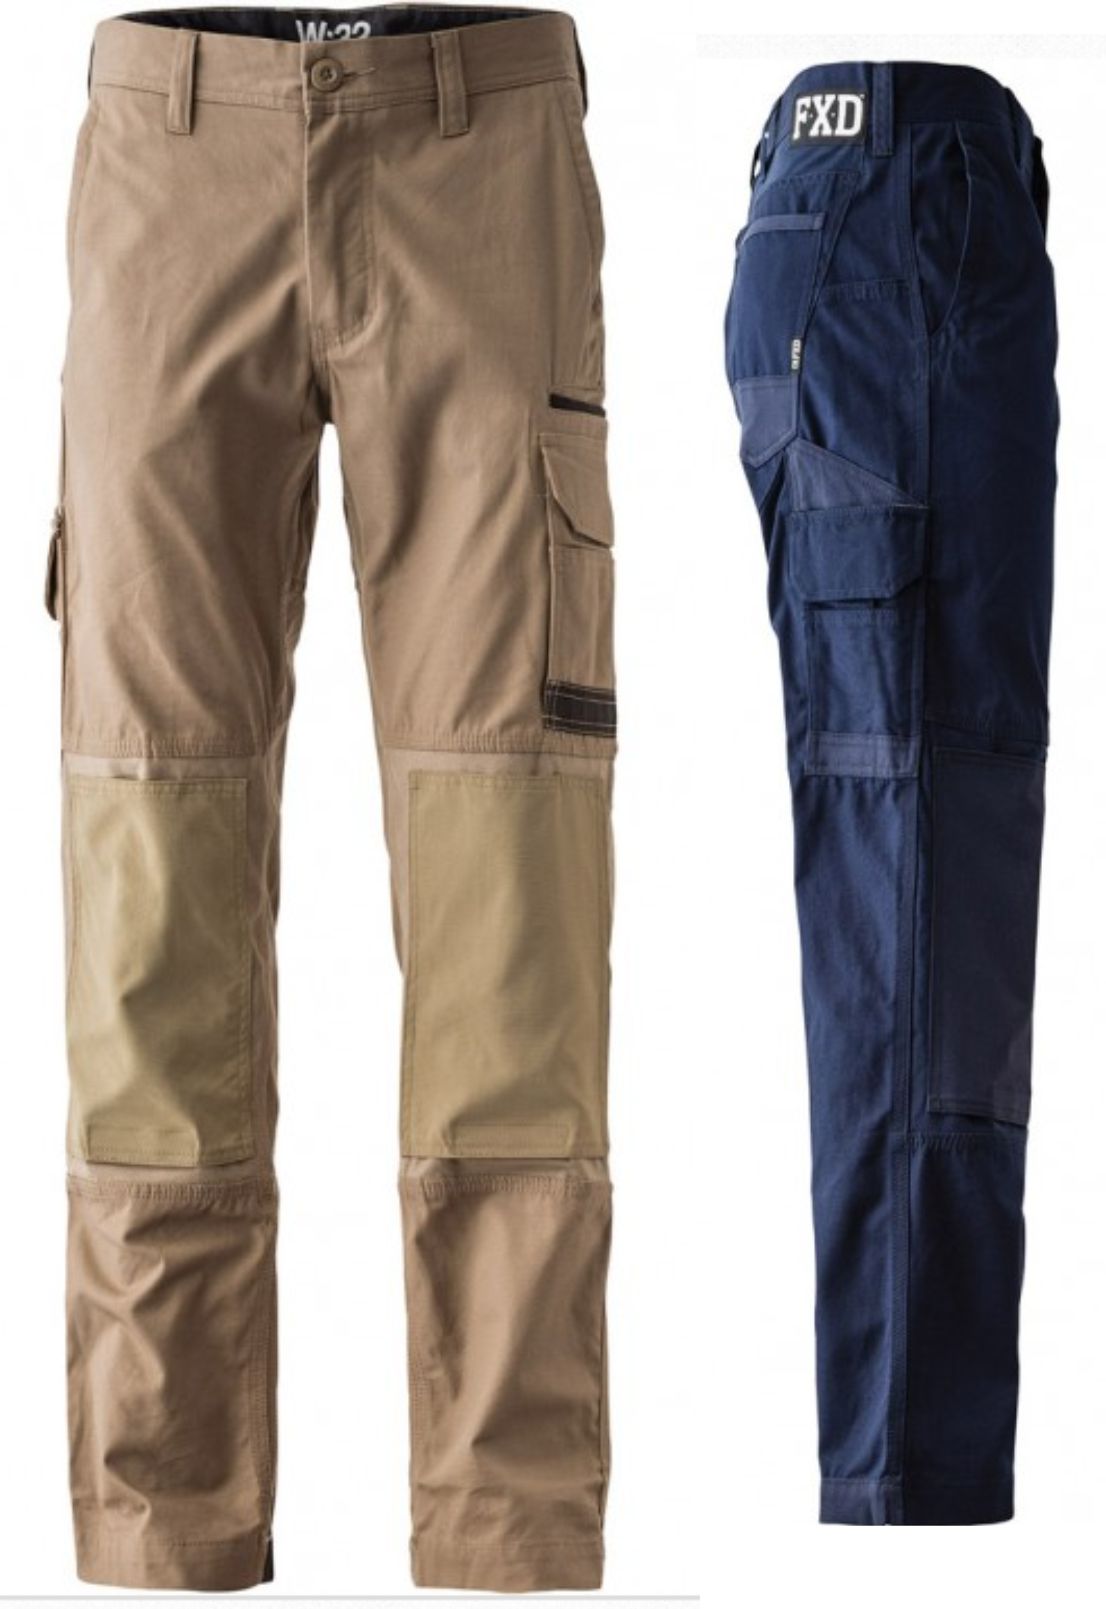 FXD WP-1 Cargo pants